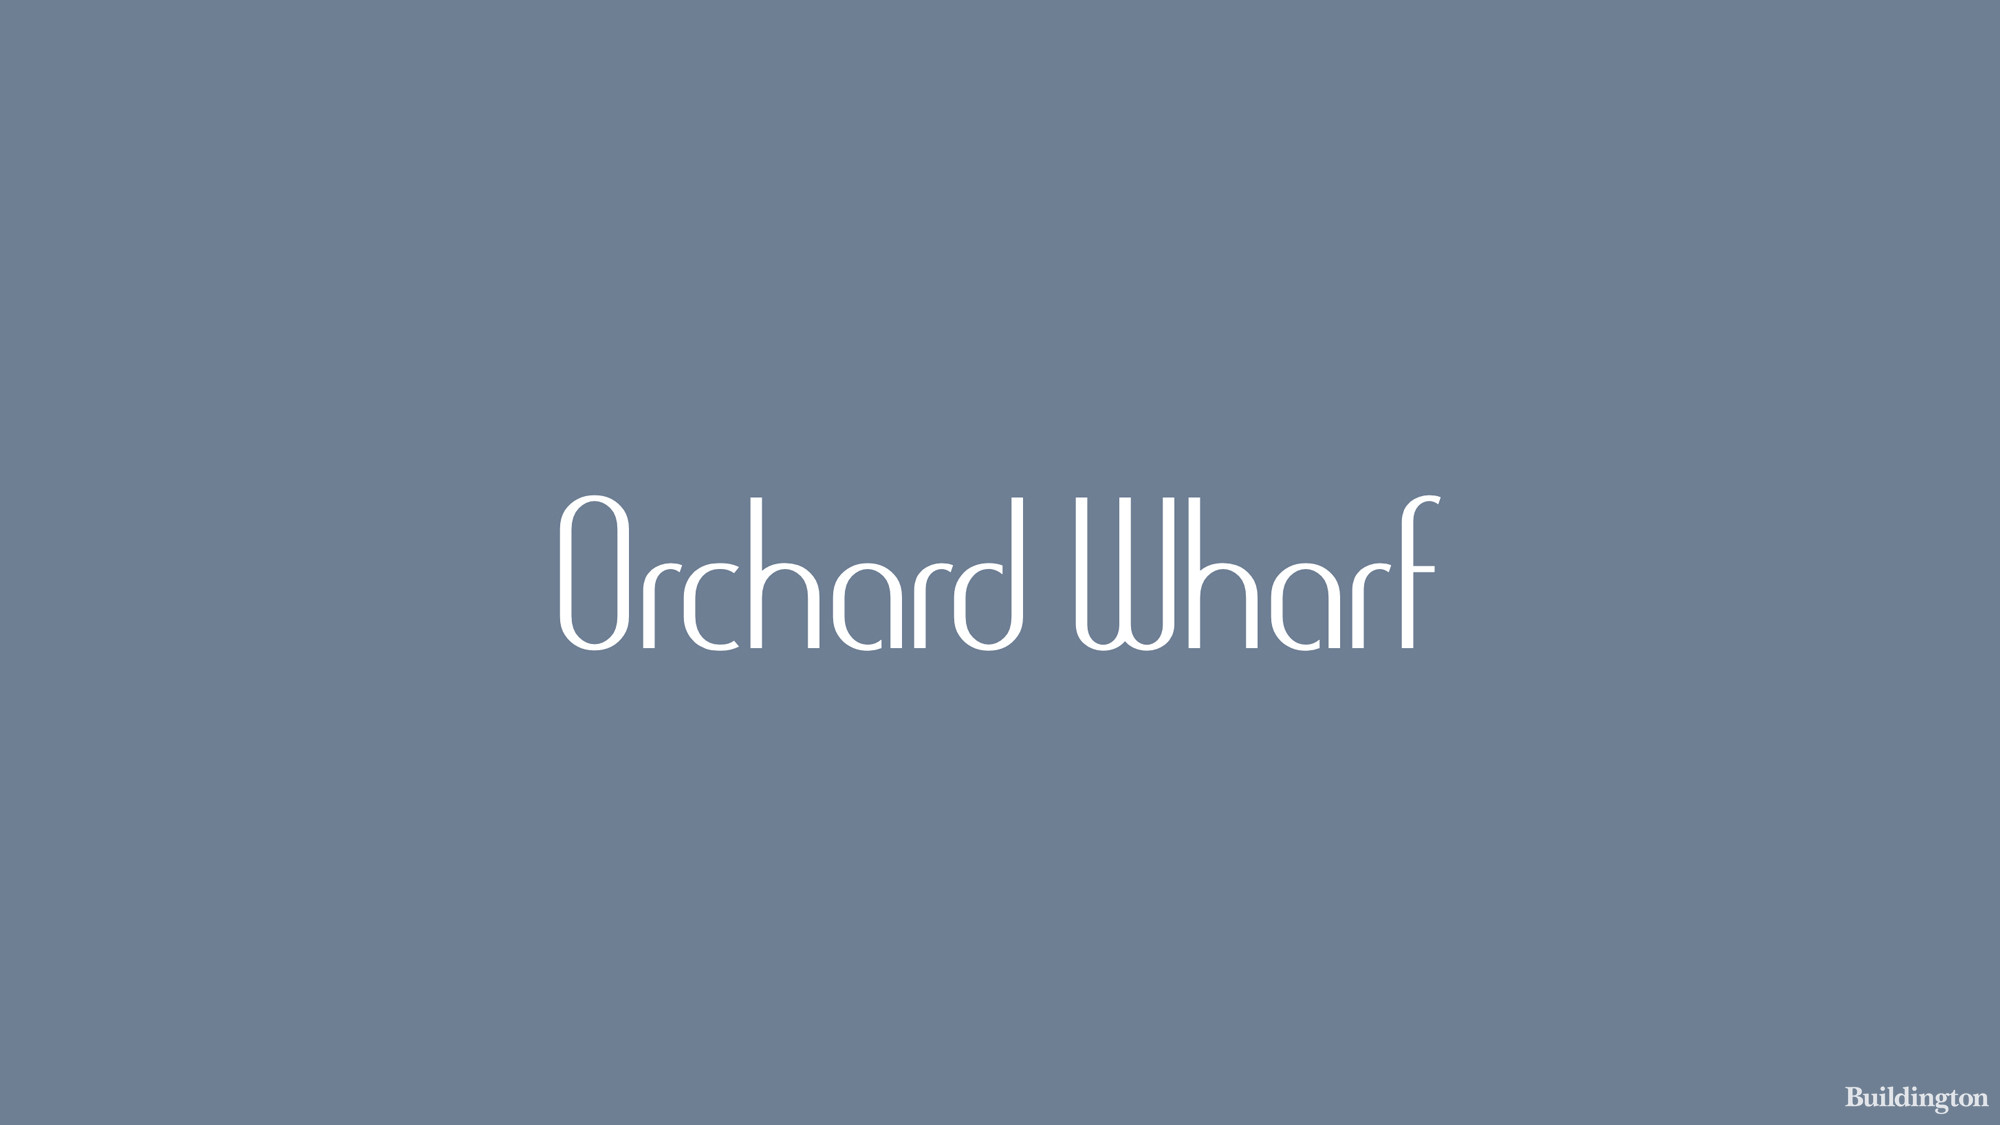 Orchard Wharf development logo